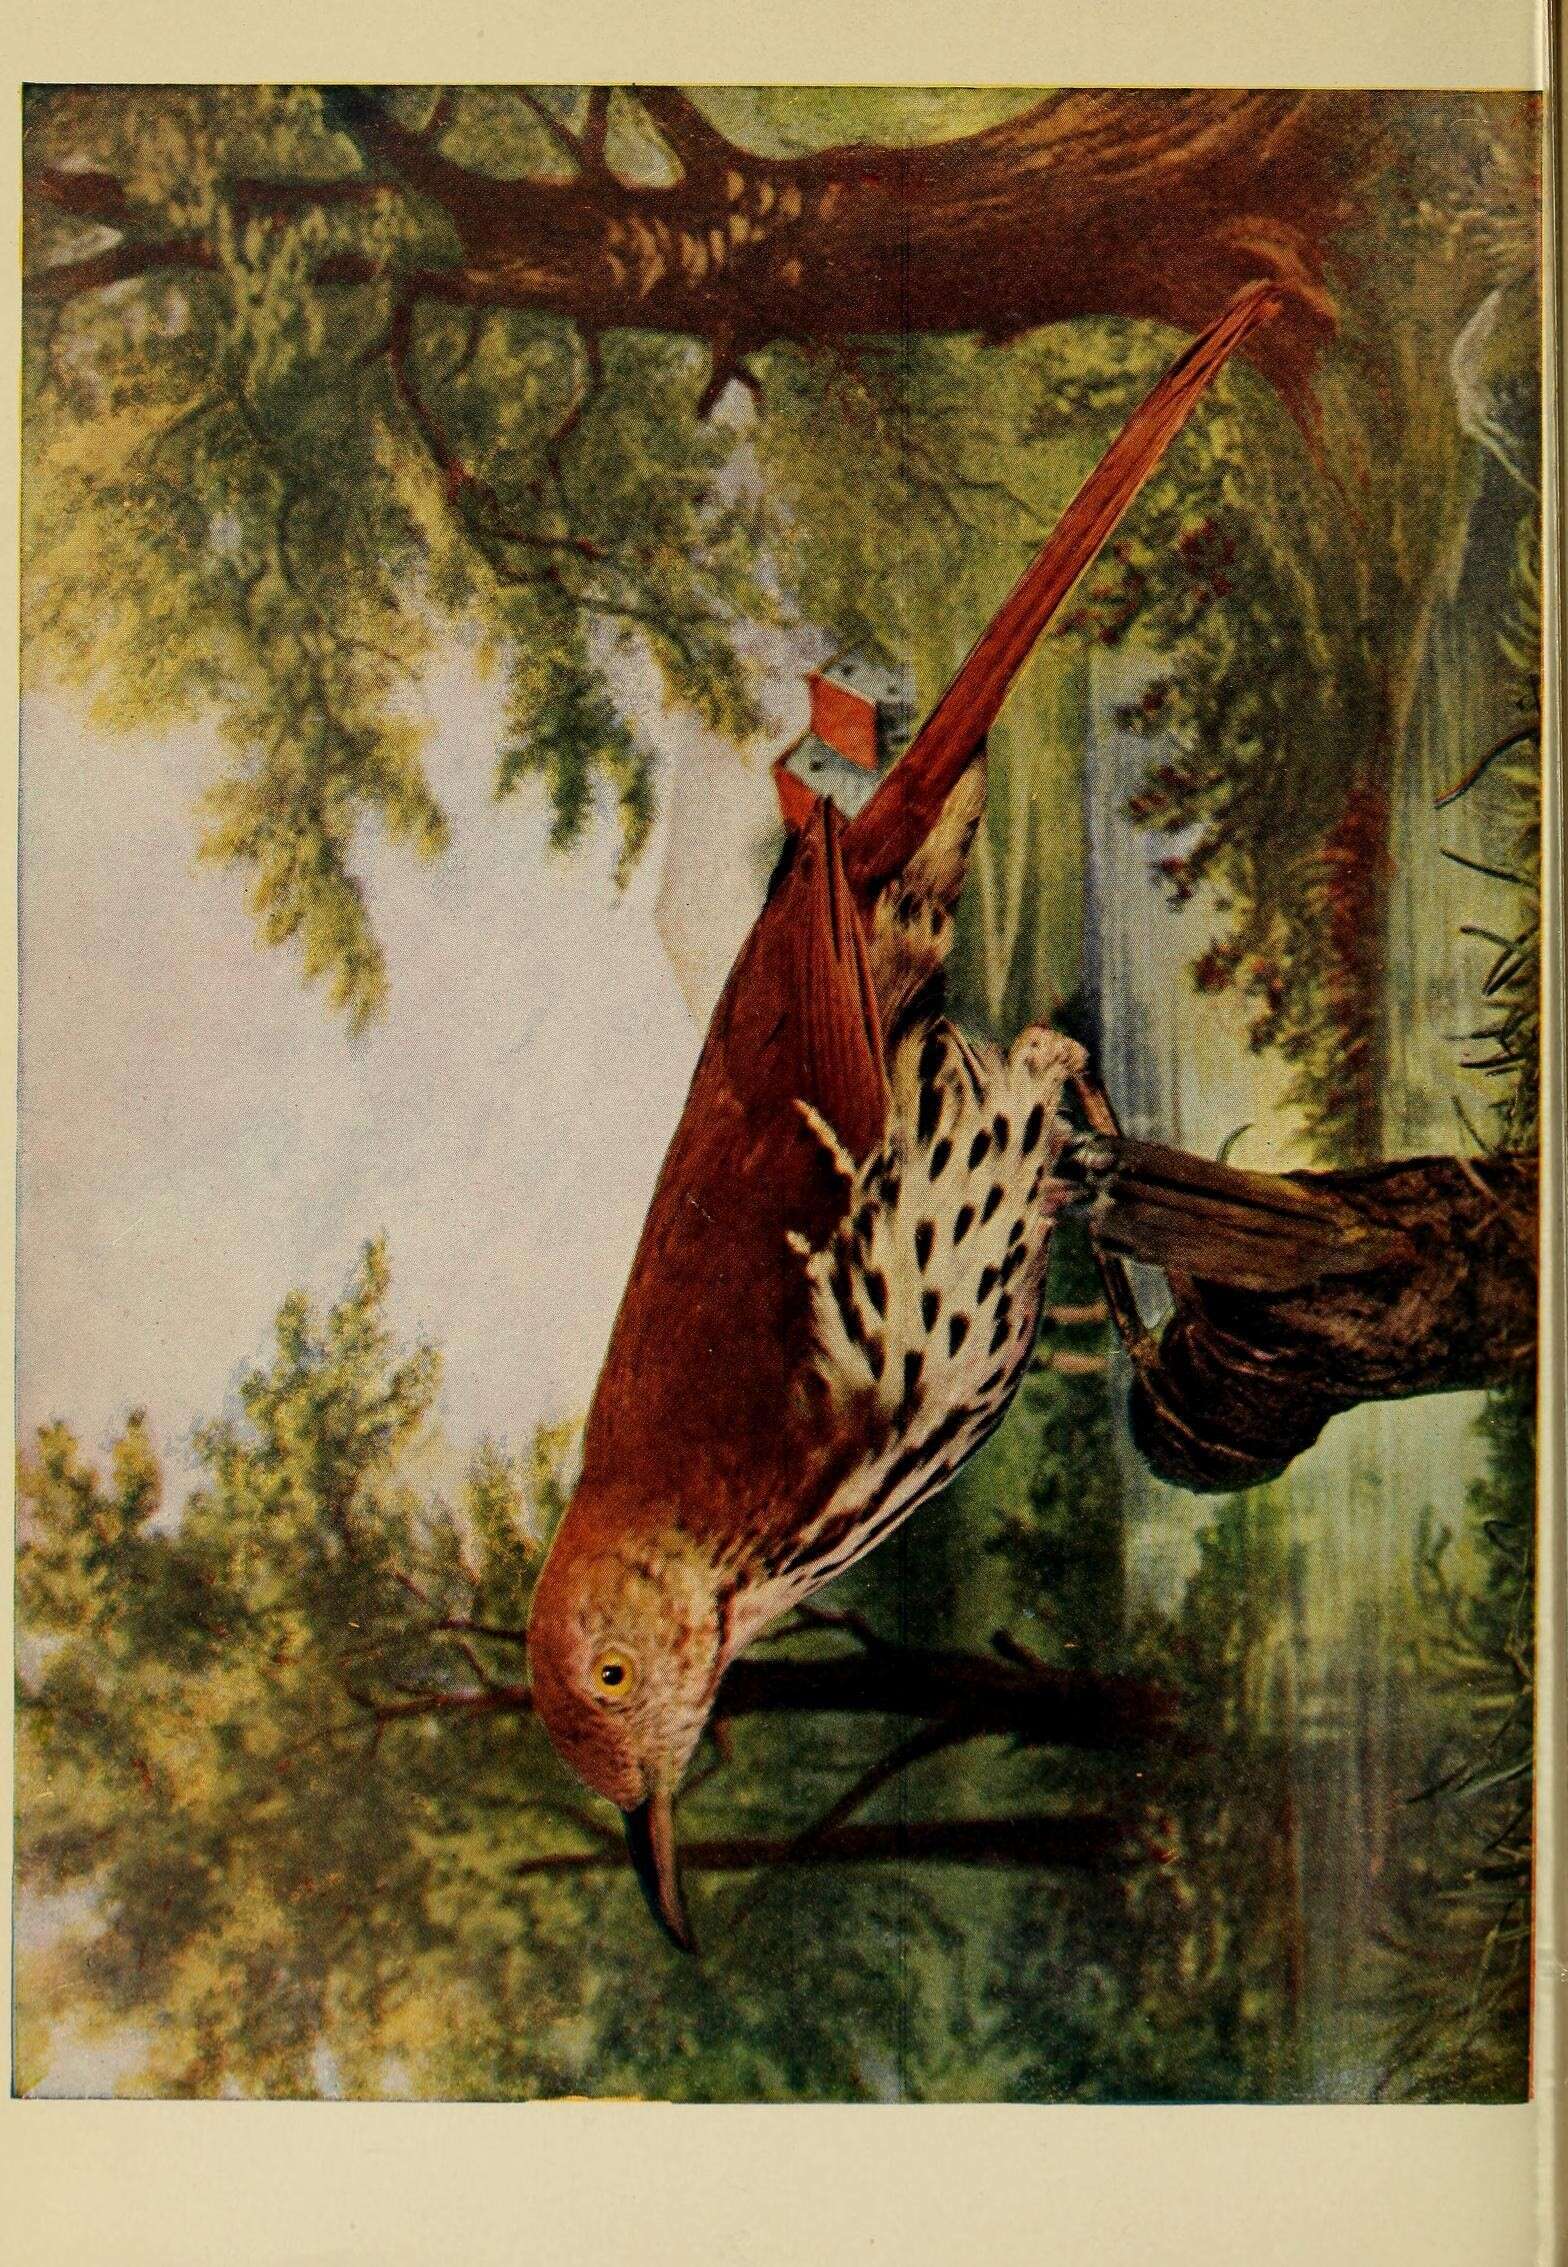 Image of Toxostoma Wagler 1831